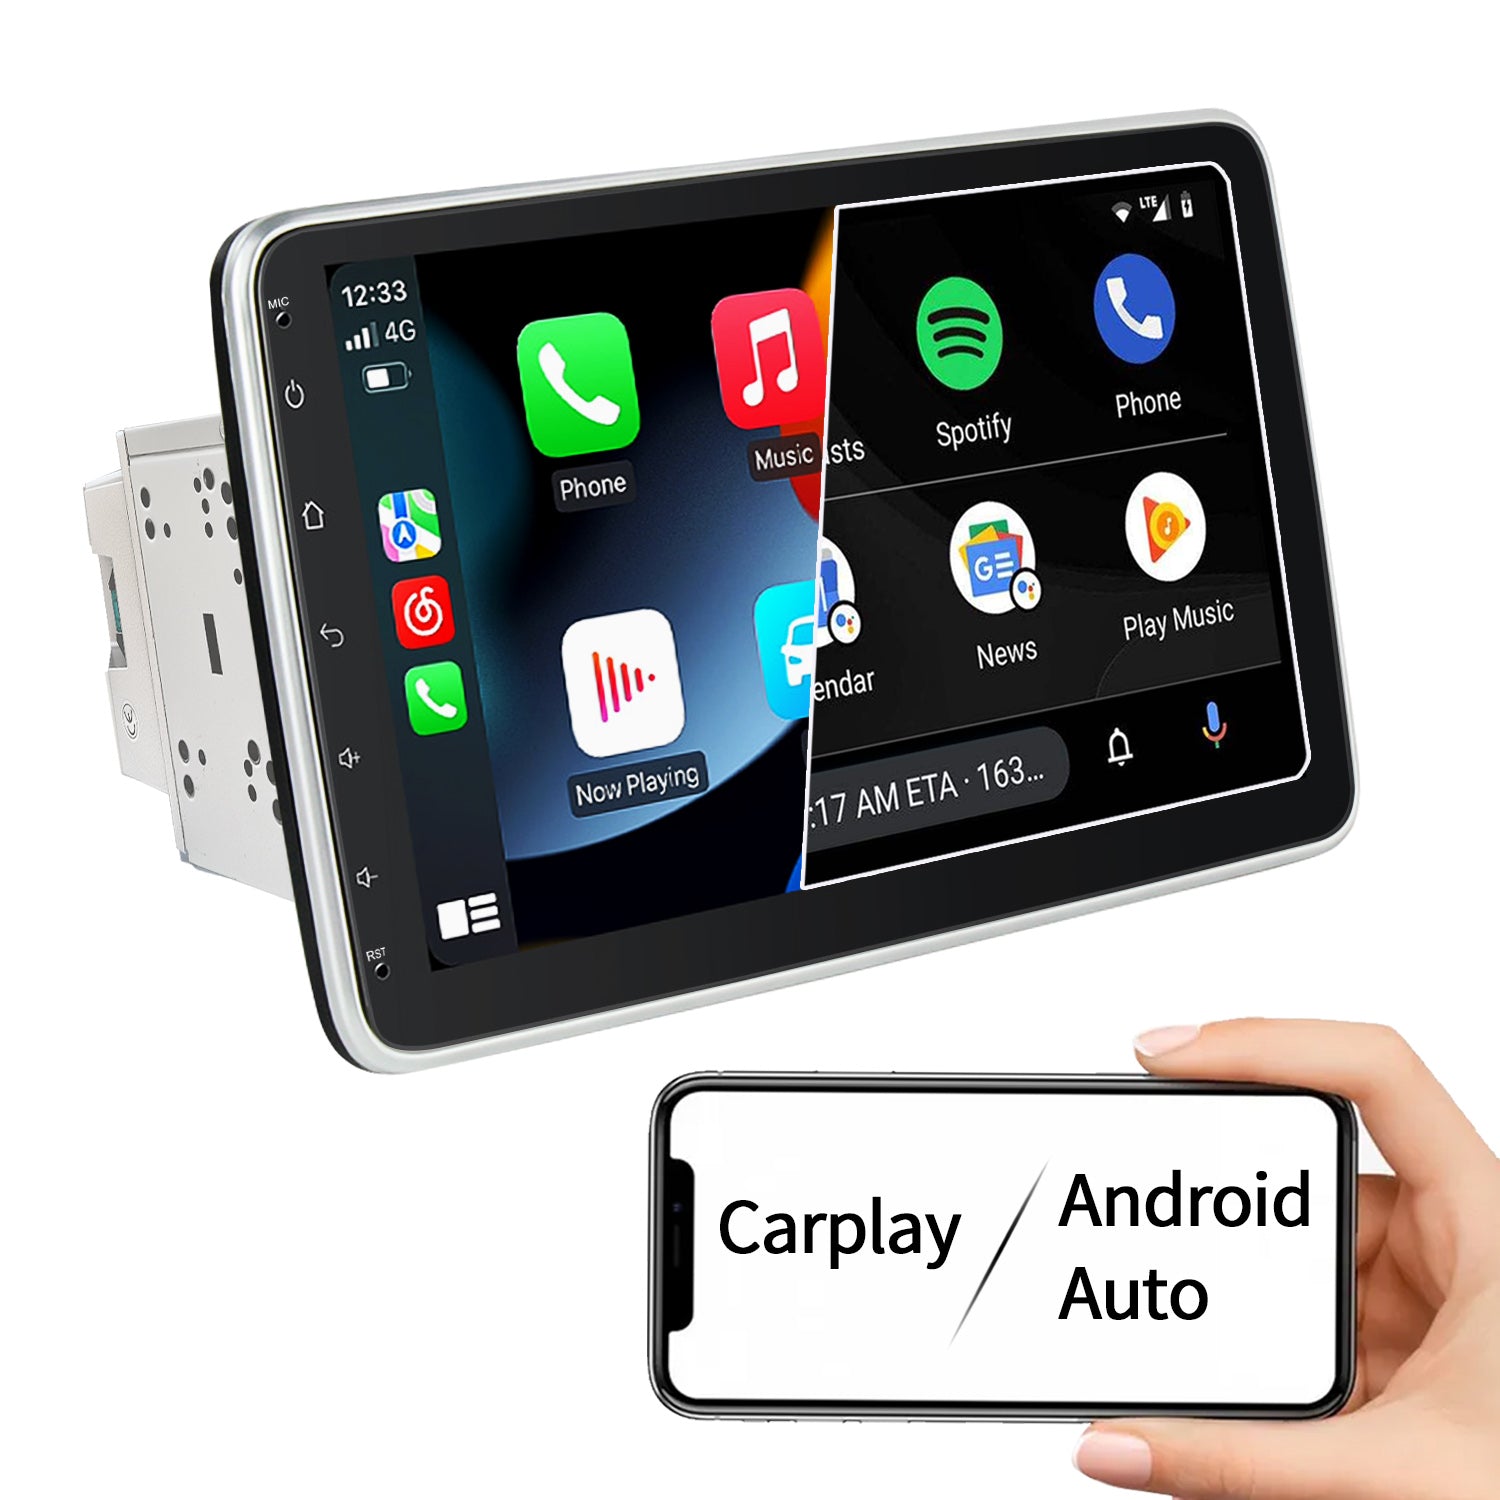 Autoradio 2 Din Android 10.1 con Bluetooth WIFI USB/FM Navegador GPS